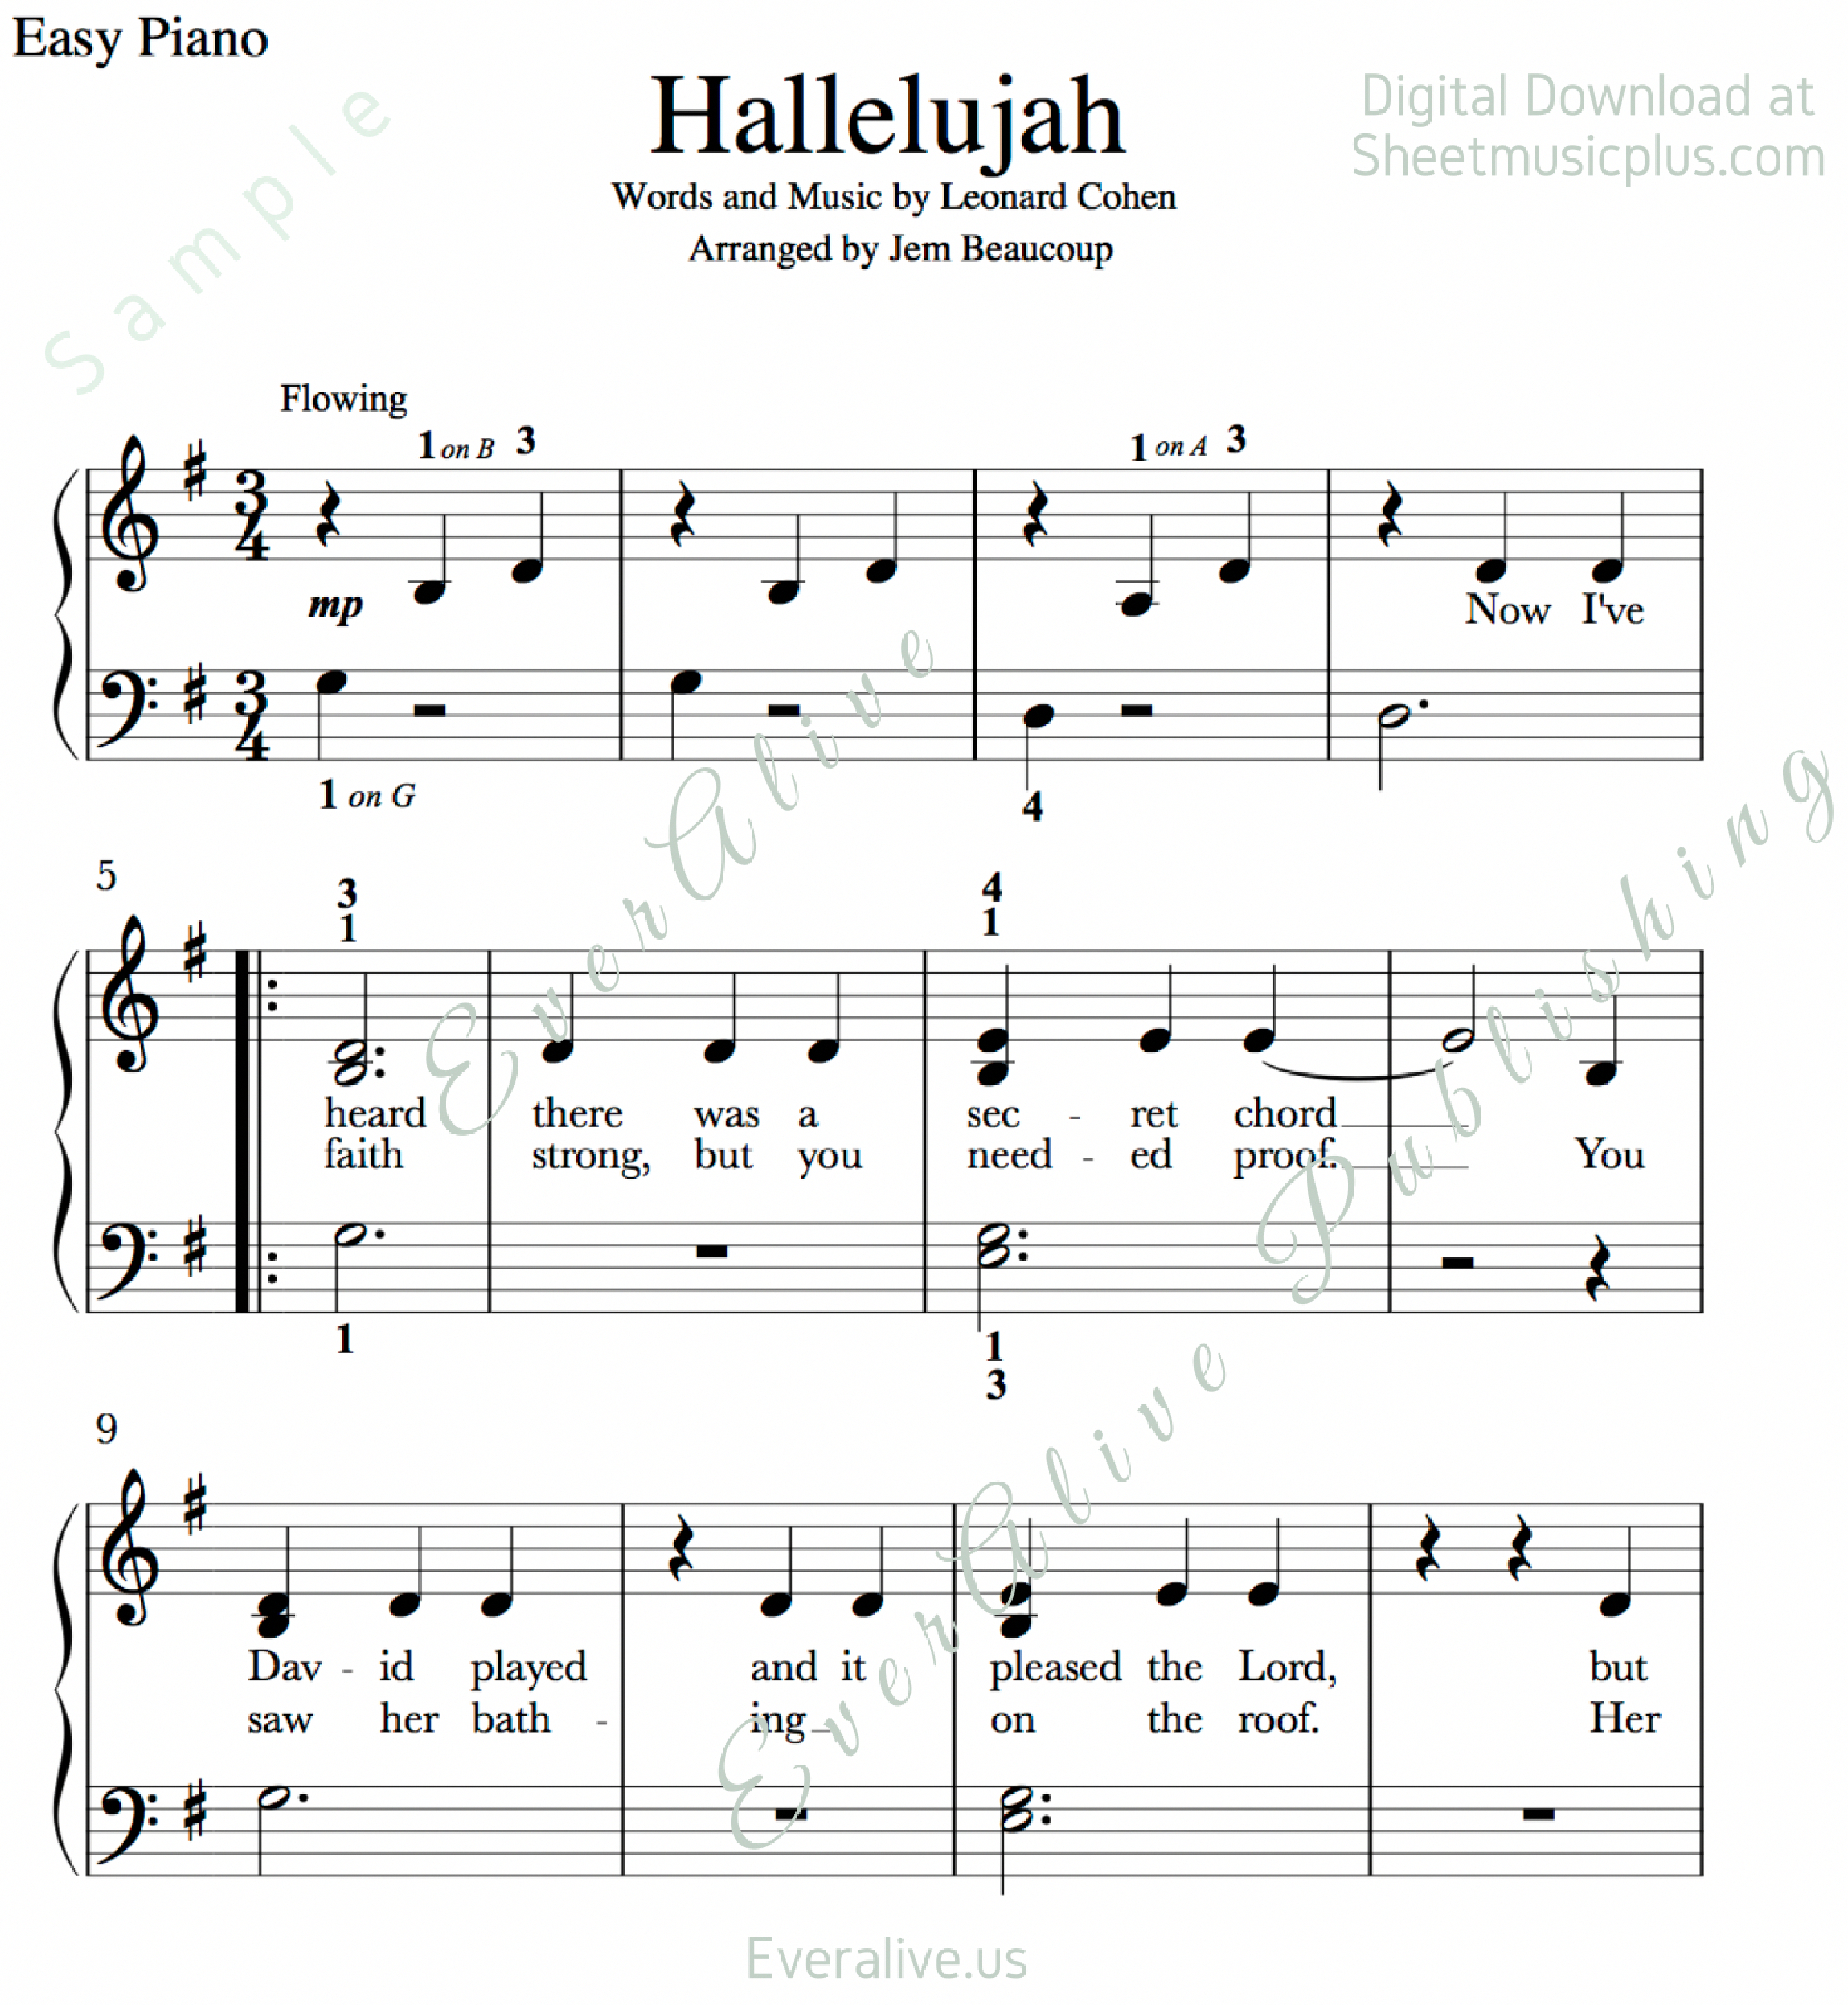 Print And Download. Hallelujah Easy Piano Music. Leonard Cohen - Free Printable Piano Sheet Music For Hallelujah By Leonard Cohen